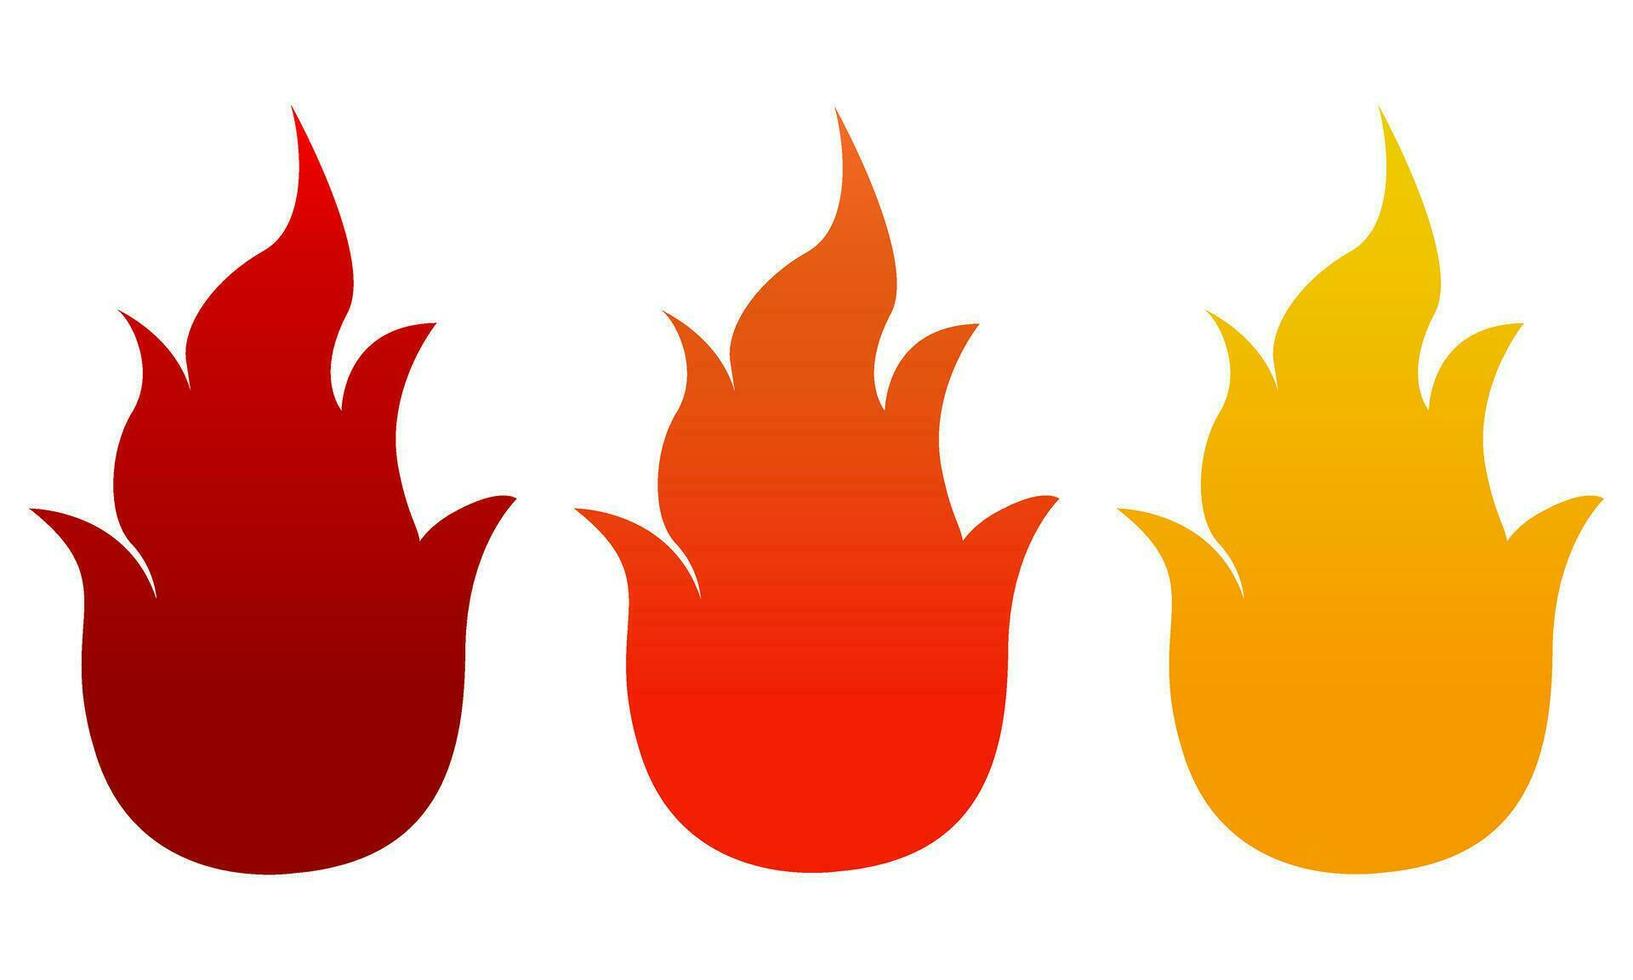 samling av enkel illustrationer av tre typer av brand mönster 2 vektor